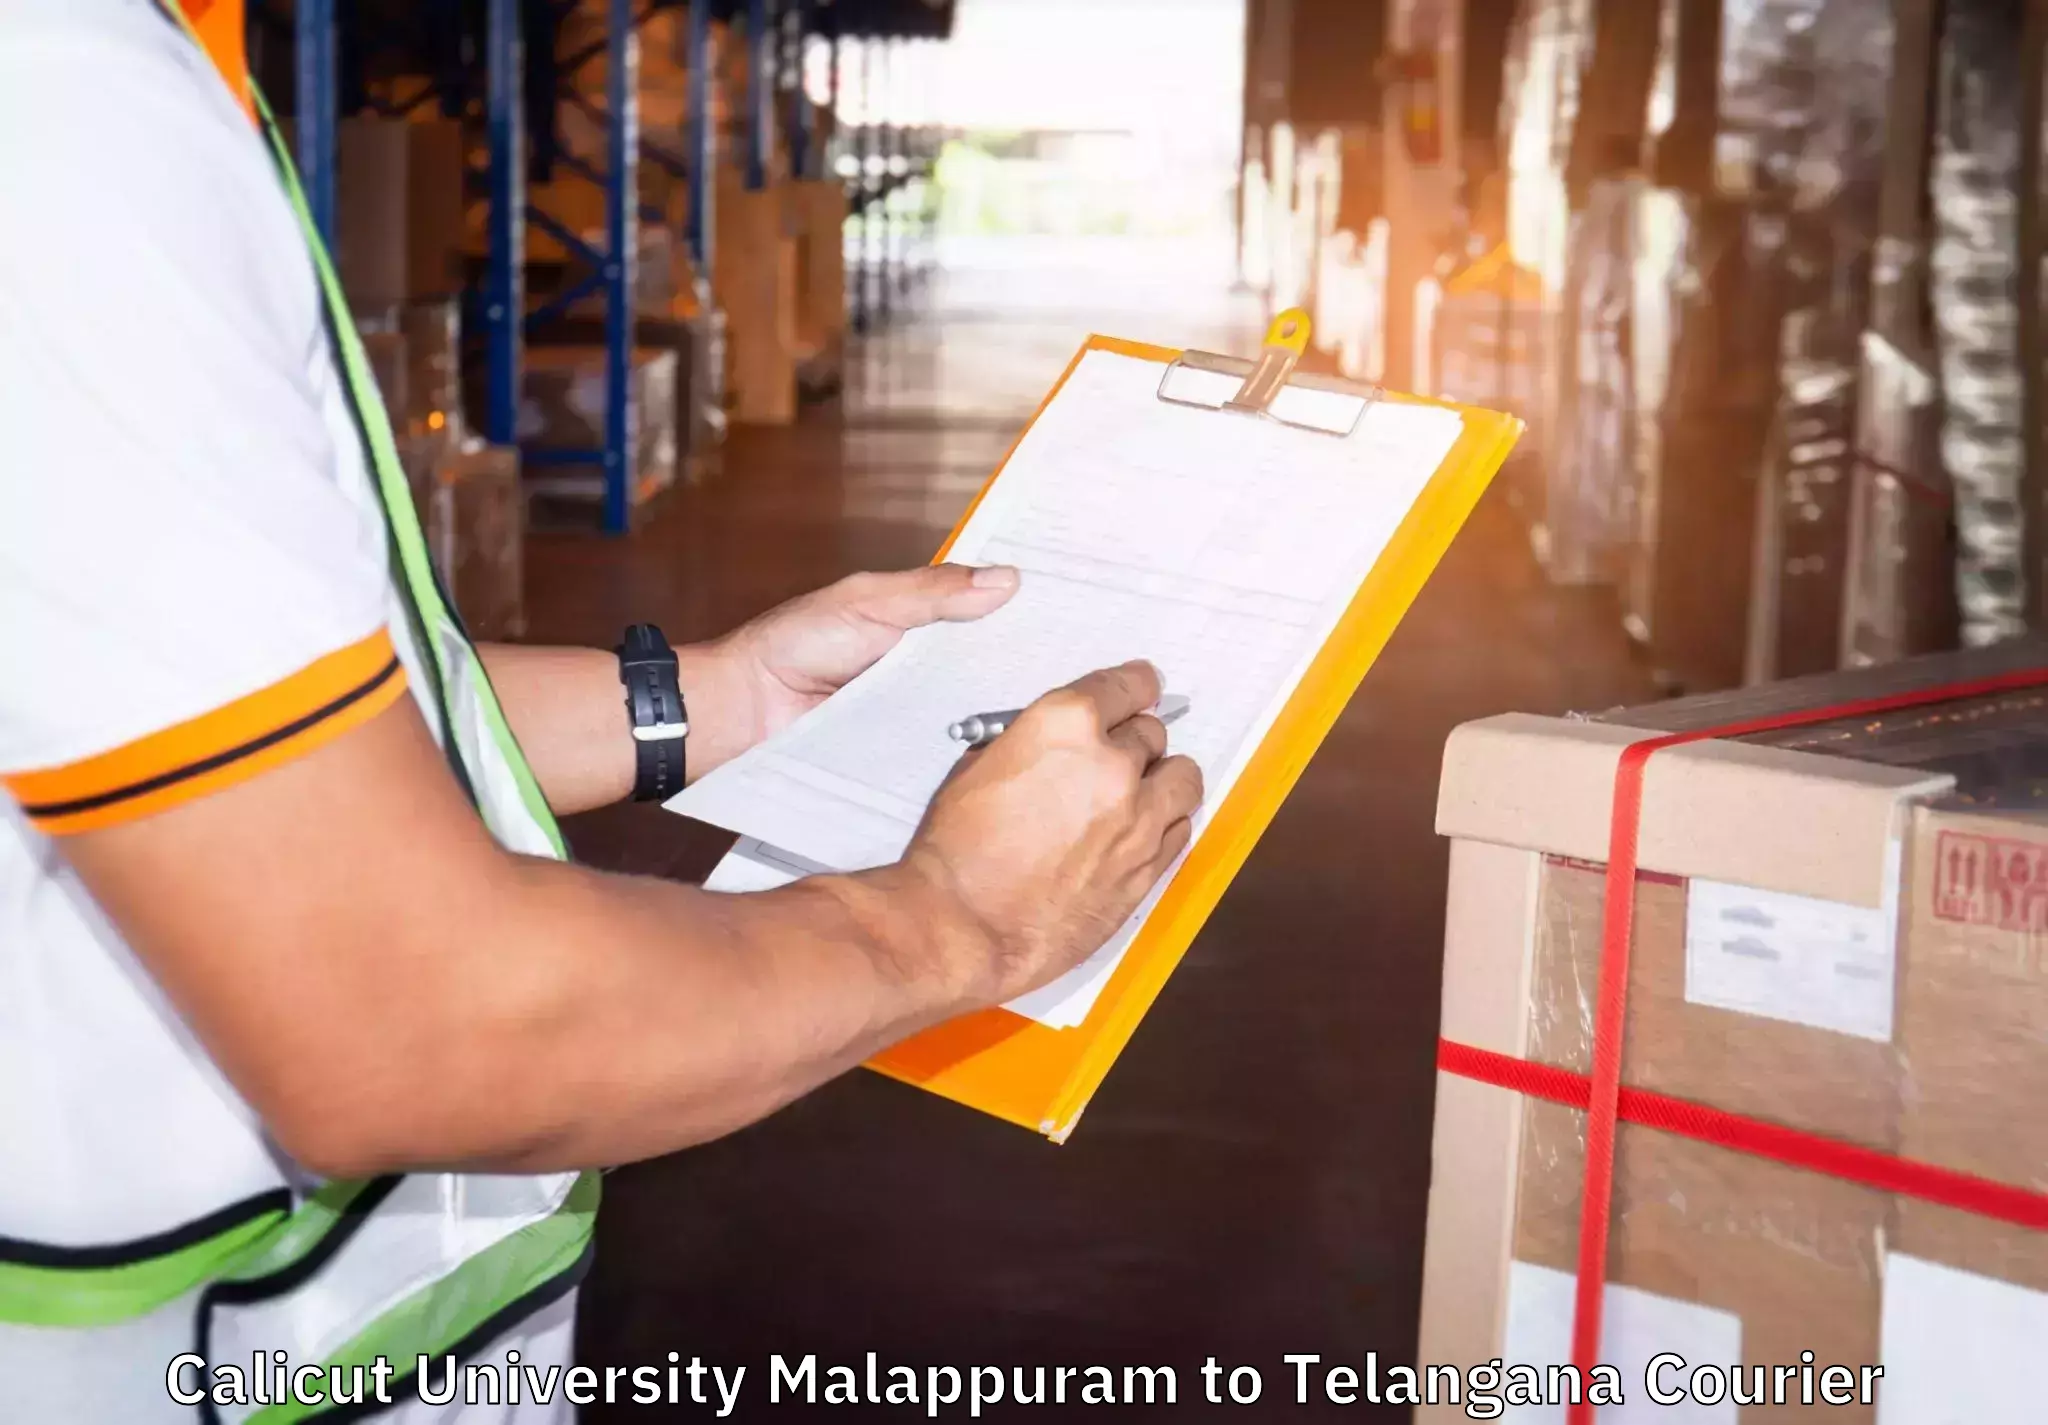 Efficient moving company in Calicut University Malappuram to Kacheguda